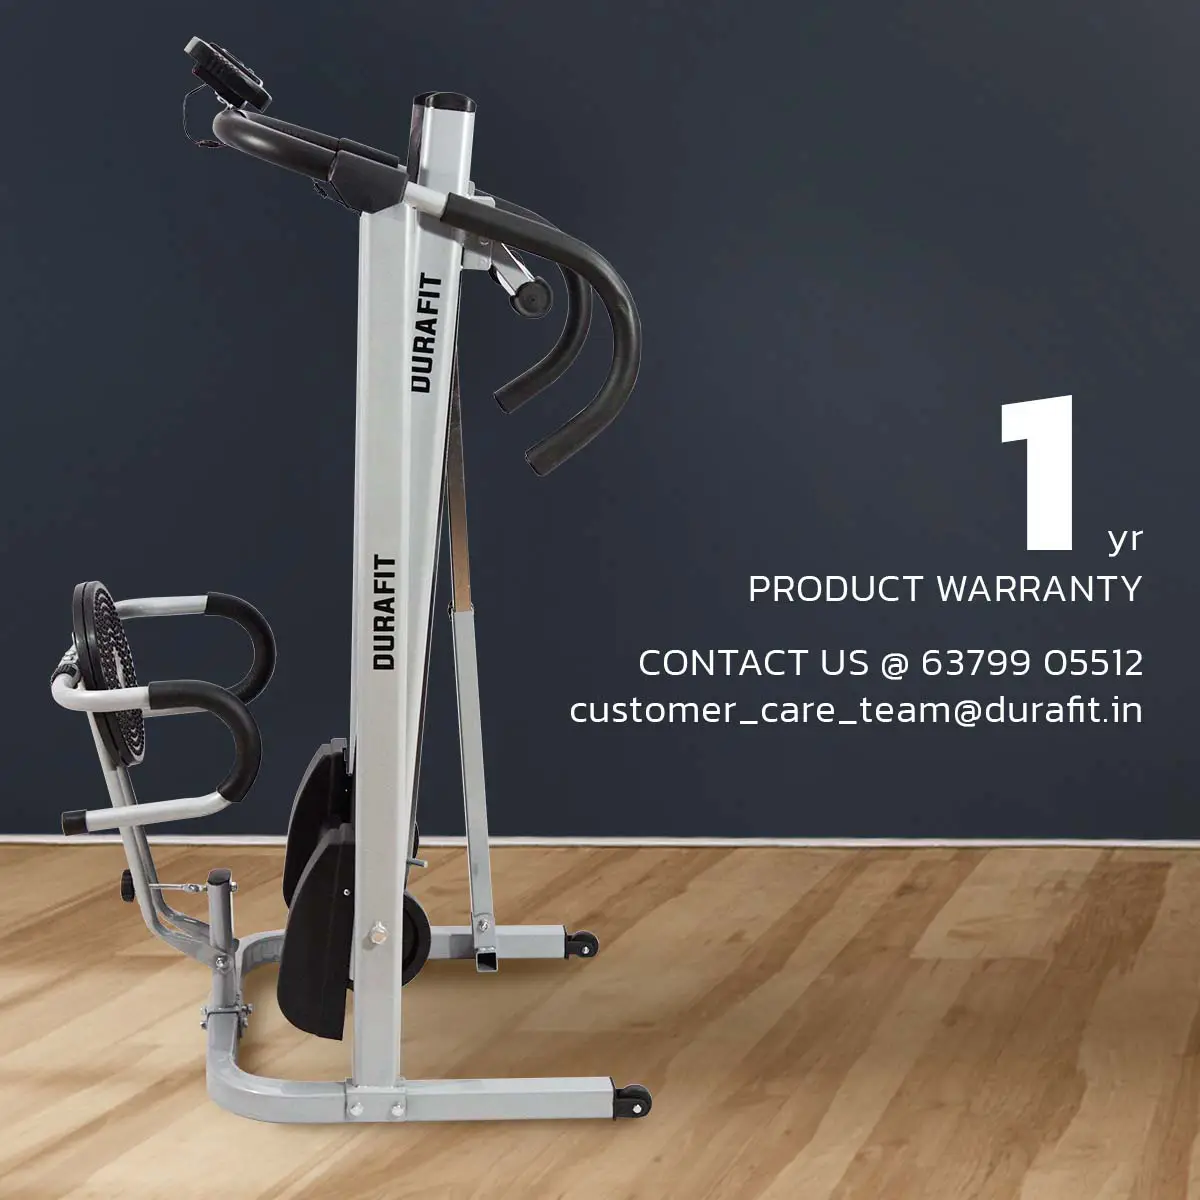 Durafit Manual Treadmill Hmtt1 with 1 year product warranty